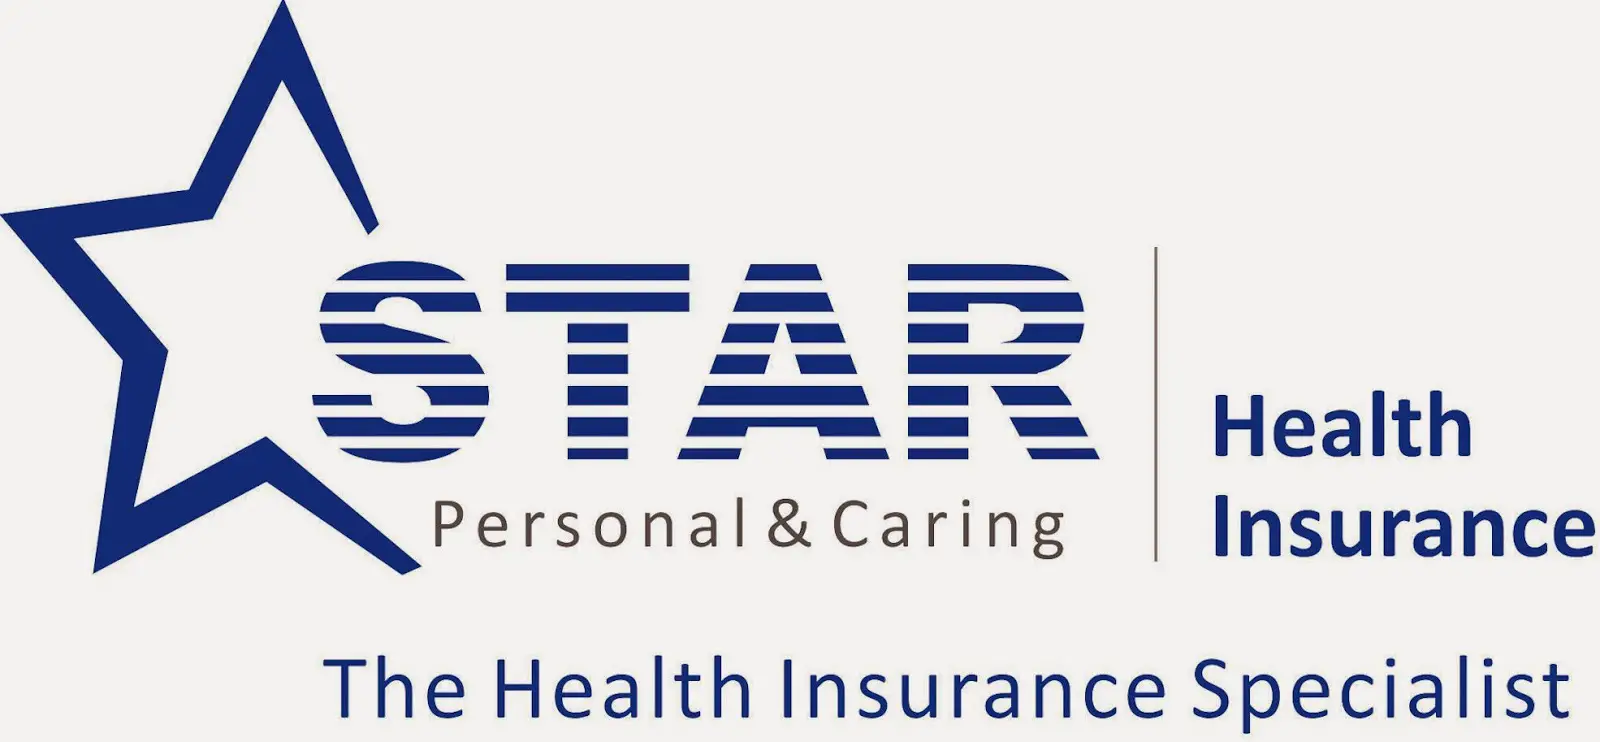 Star-Health-Insurance-Company-Limited.jpg